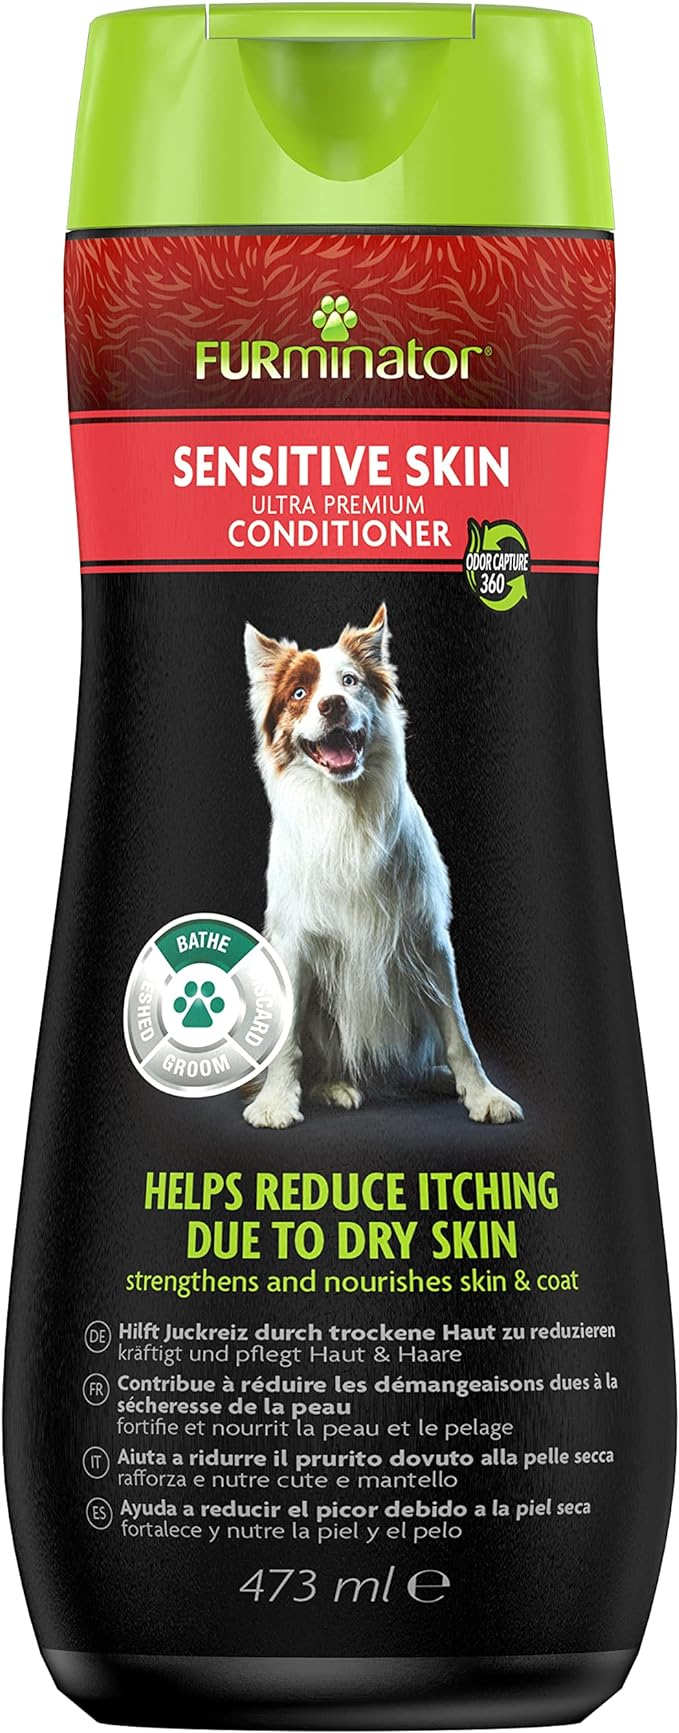 FURminator Sensitive Skin Conditioner For Dogs 473ml